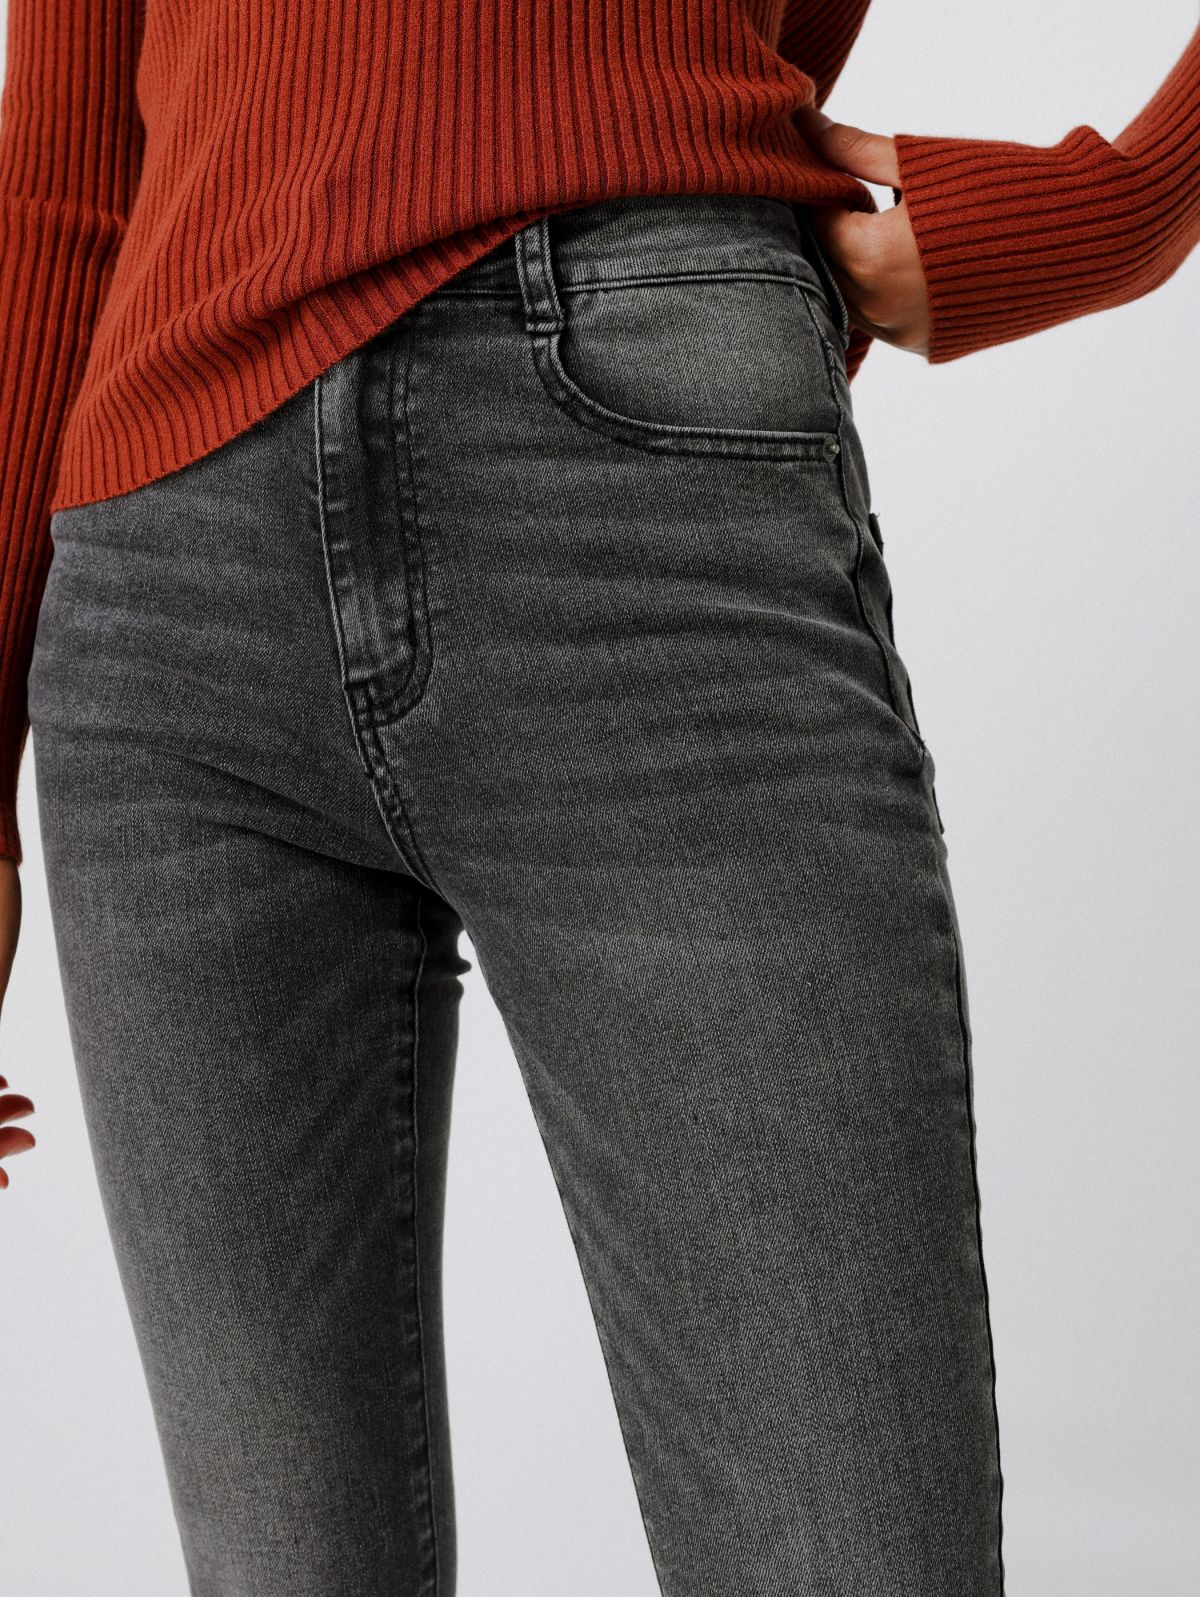  ג'ינס סקיני ארוך של FOX